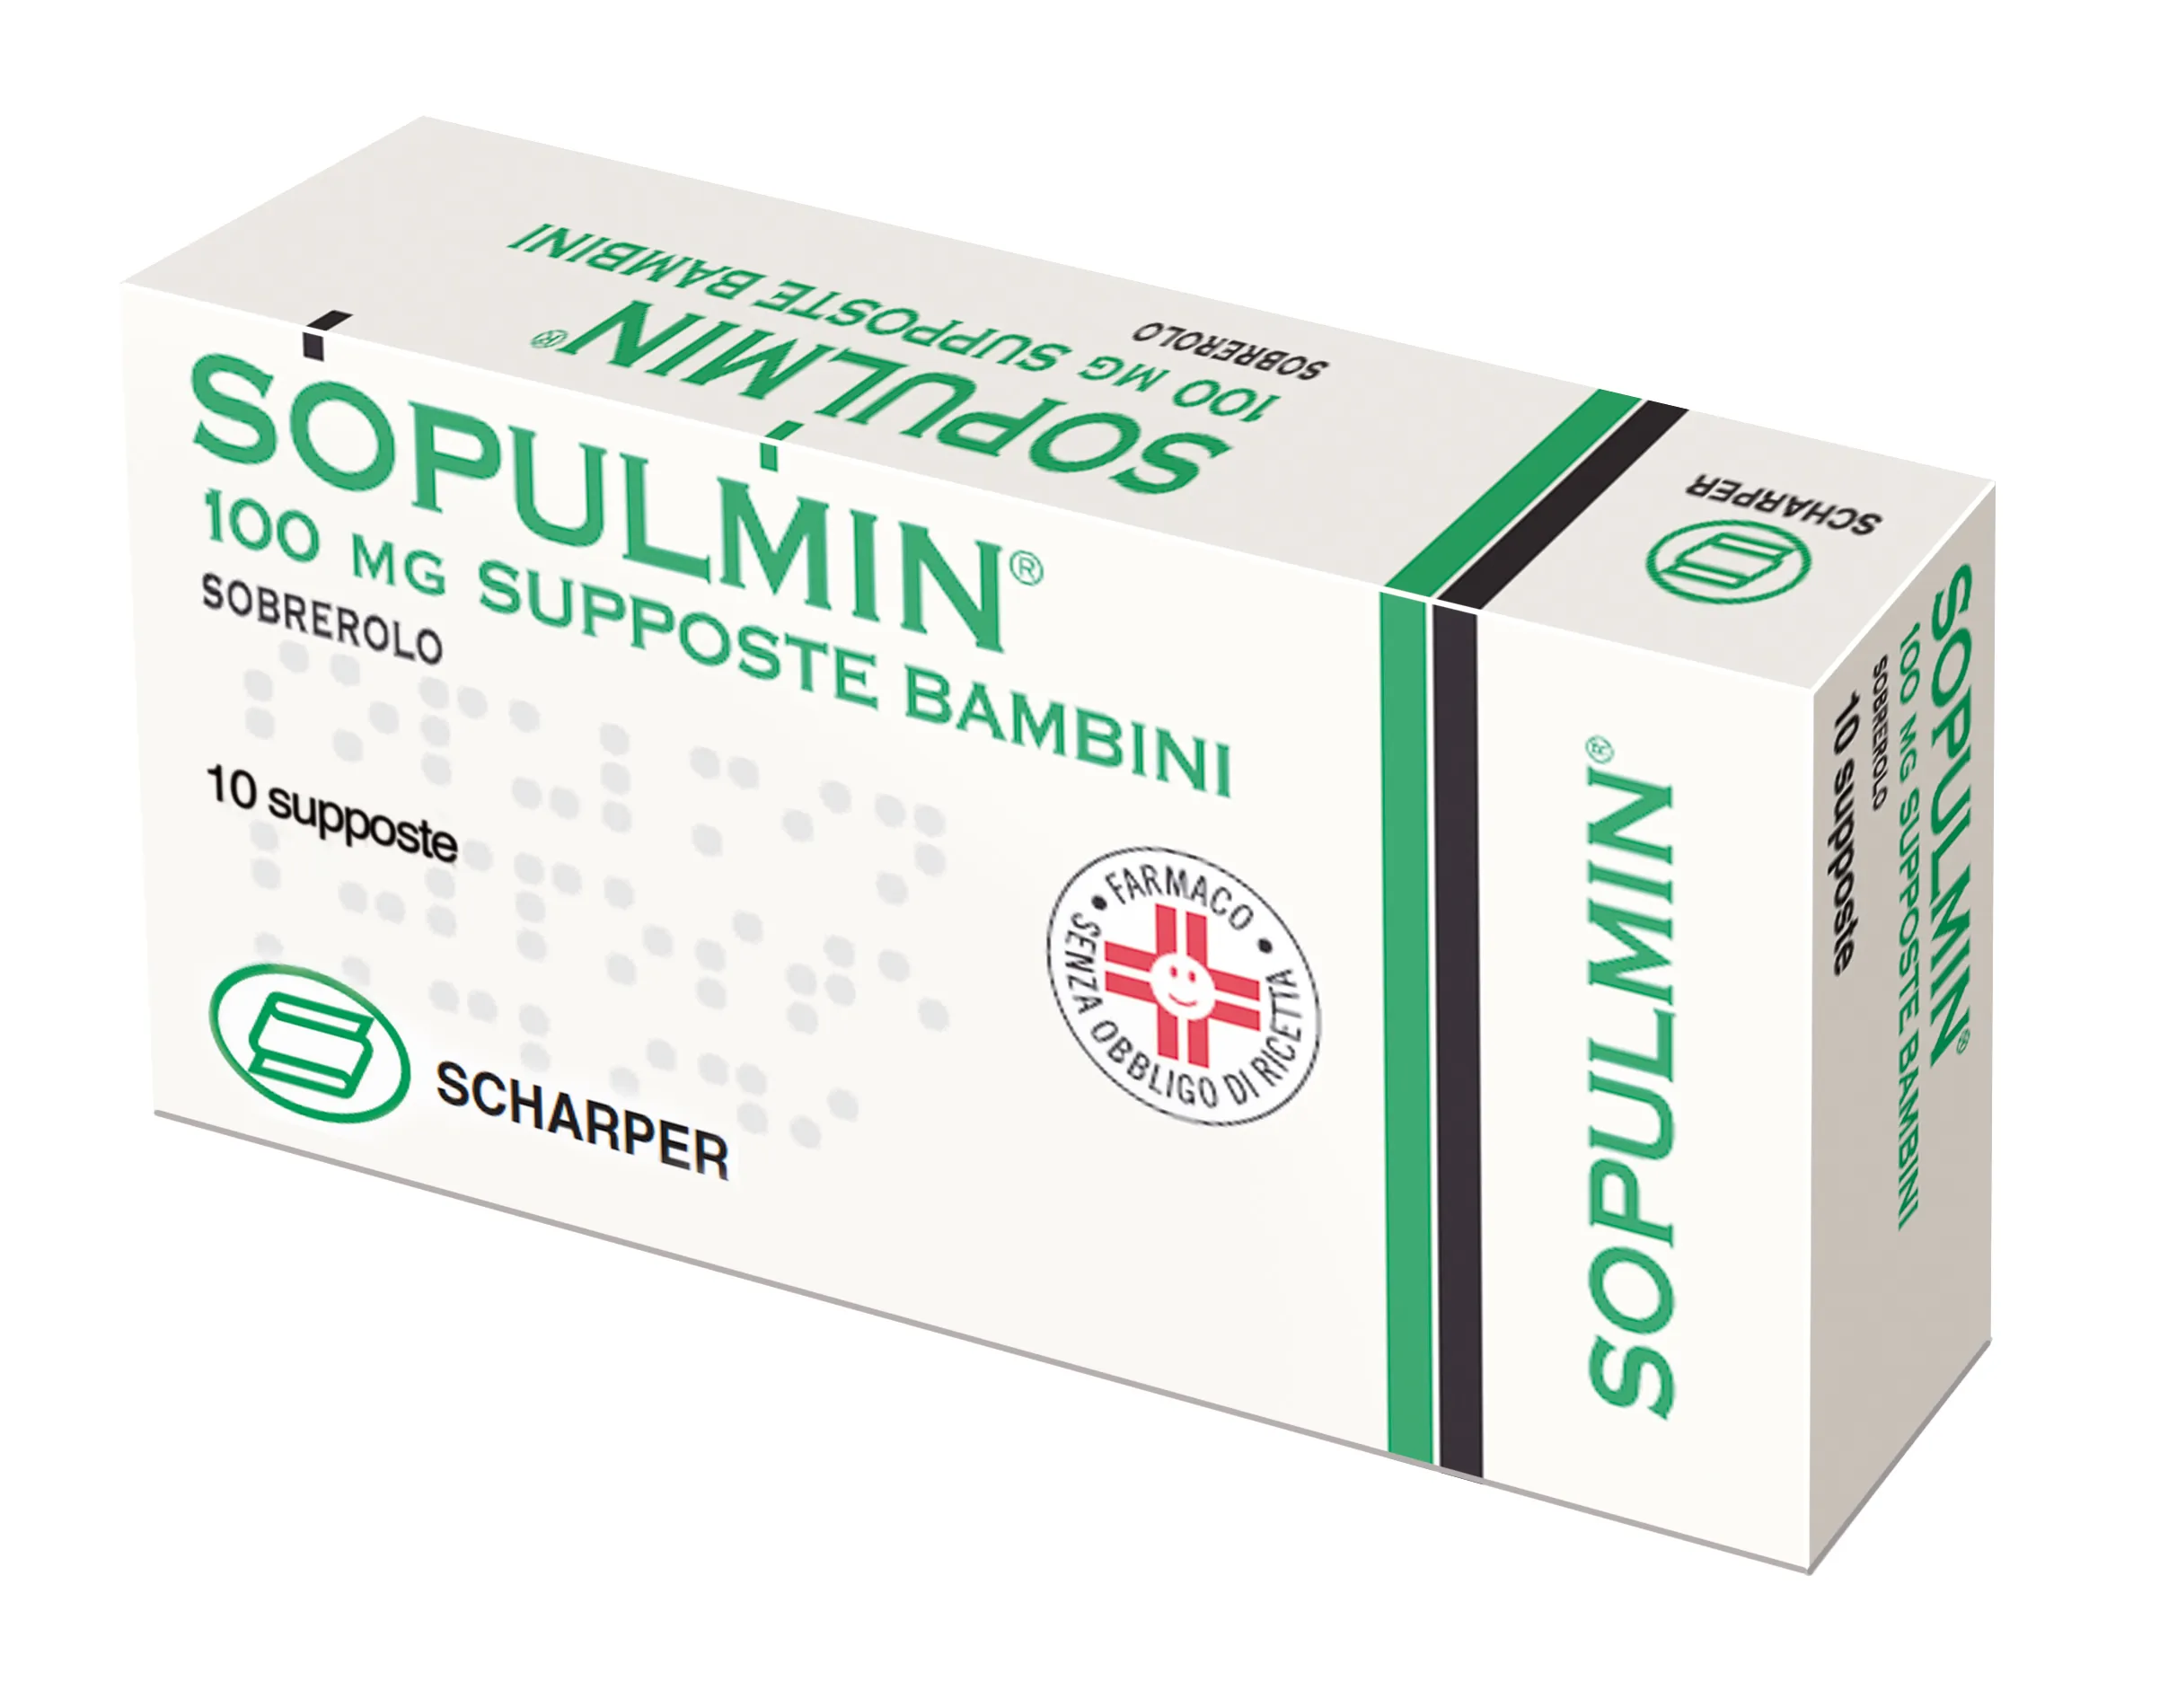 Sopulmin Bambini 100 mg 10 Supposte